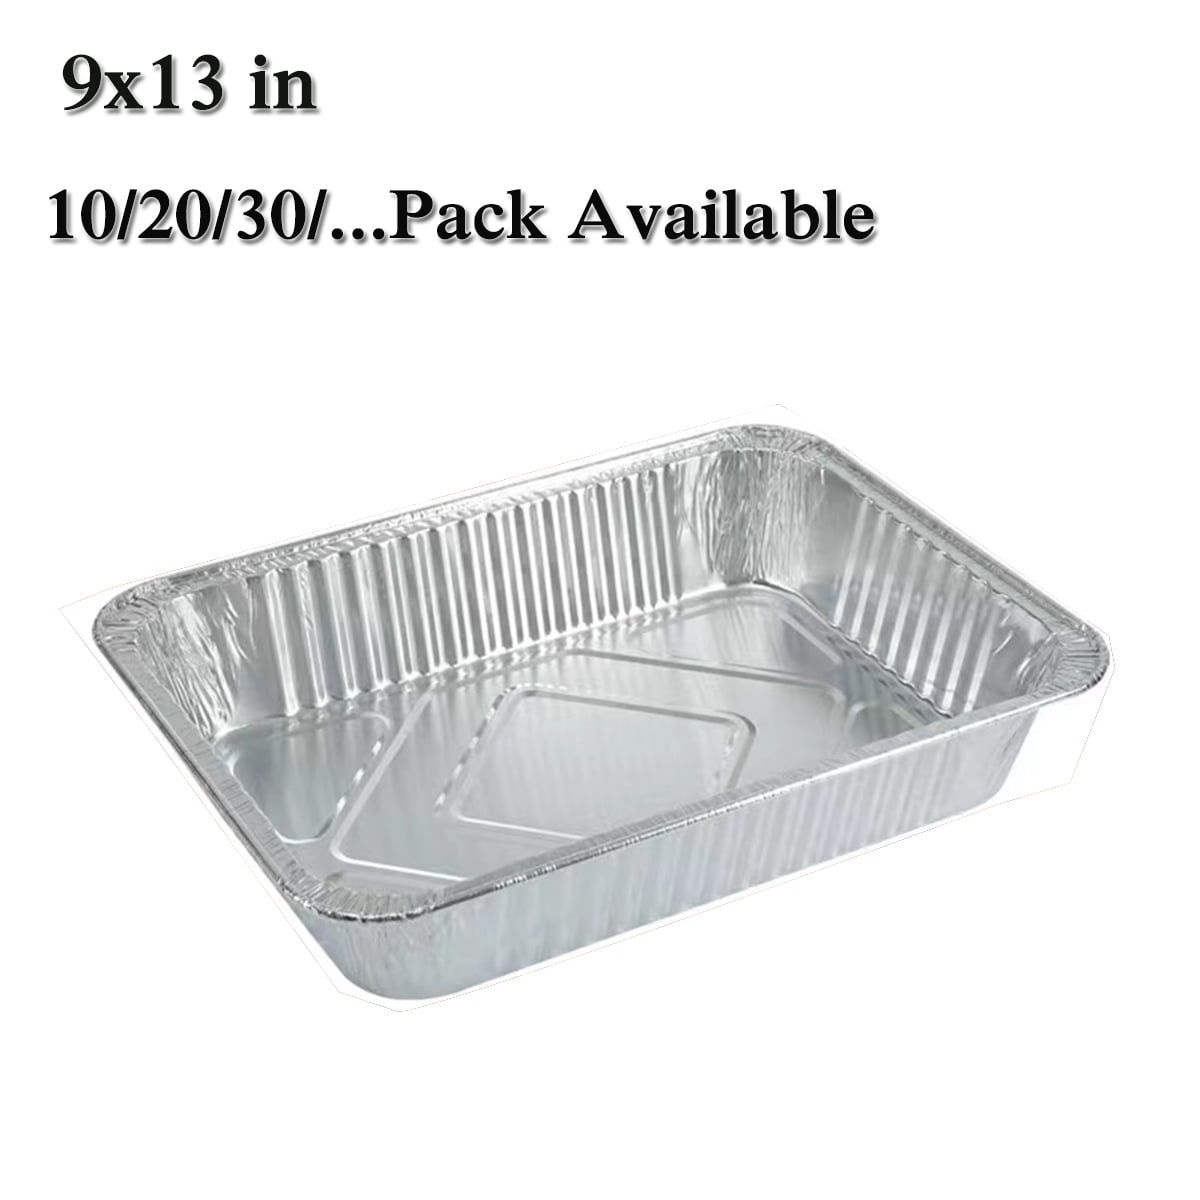 Aluminum Pan Disposable Size 9x13, Aluminum Pan Disposable Aluminum Foil Pan  Preparation, Baking, Food, Storage, Heating, Cooking, Chef, Catering,  Crayfish Tray 